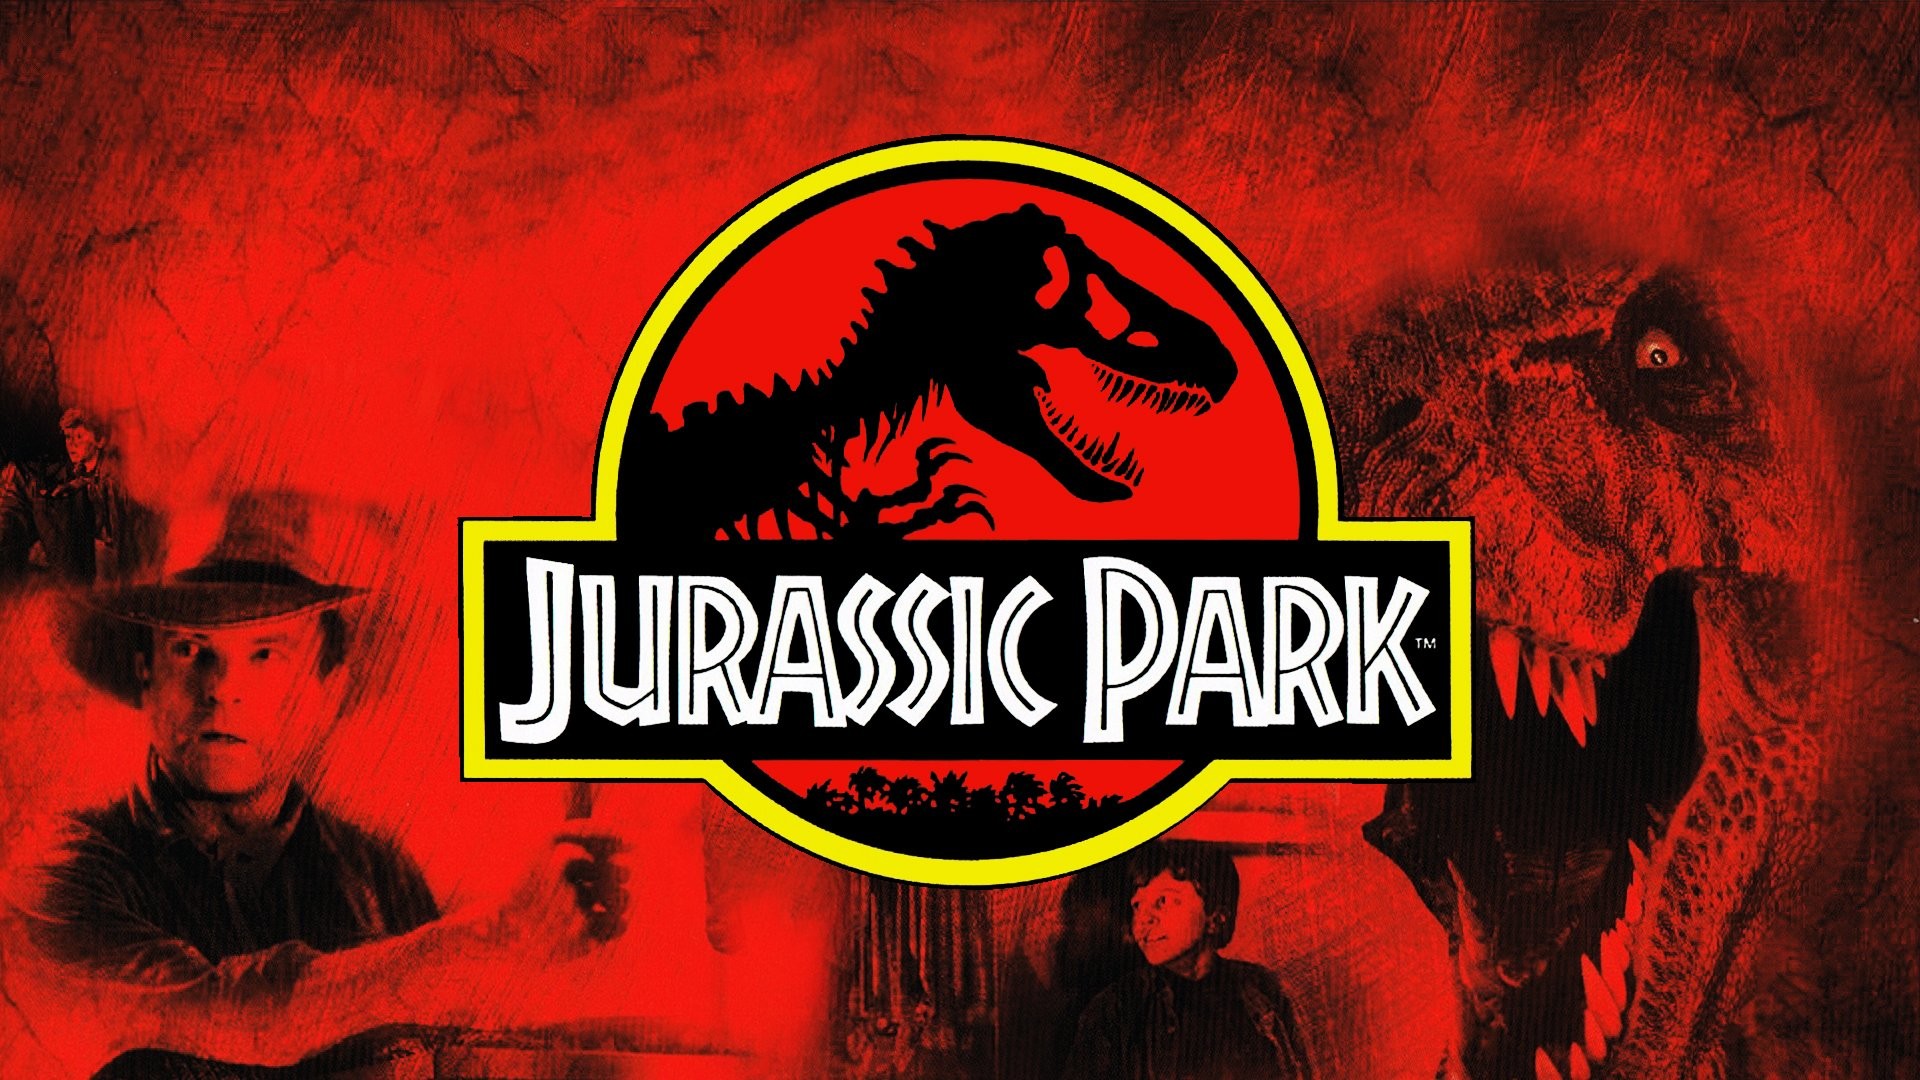 1920x1080 Jurassic Park 3 Poster - wallpaper